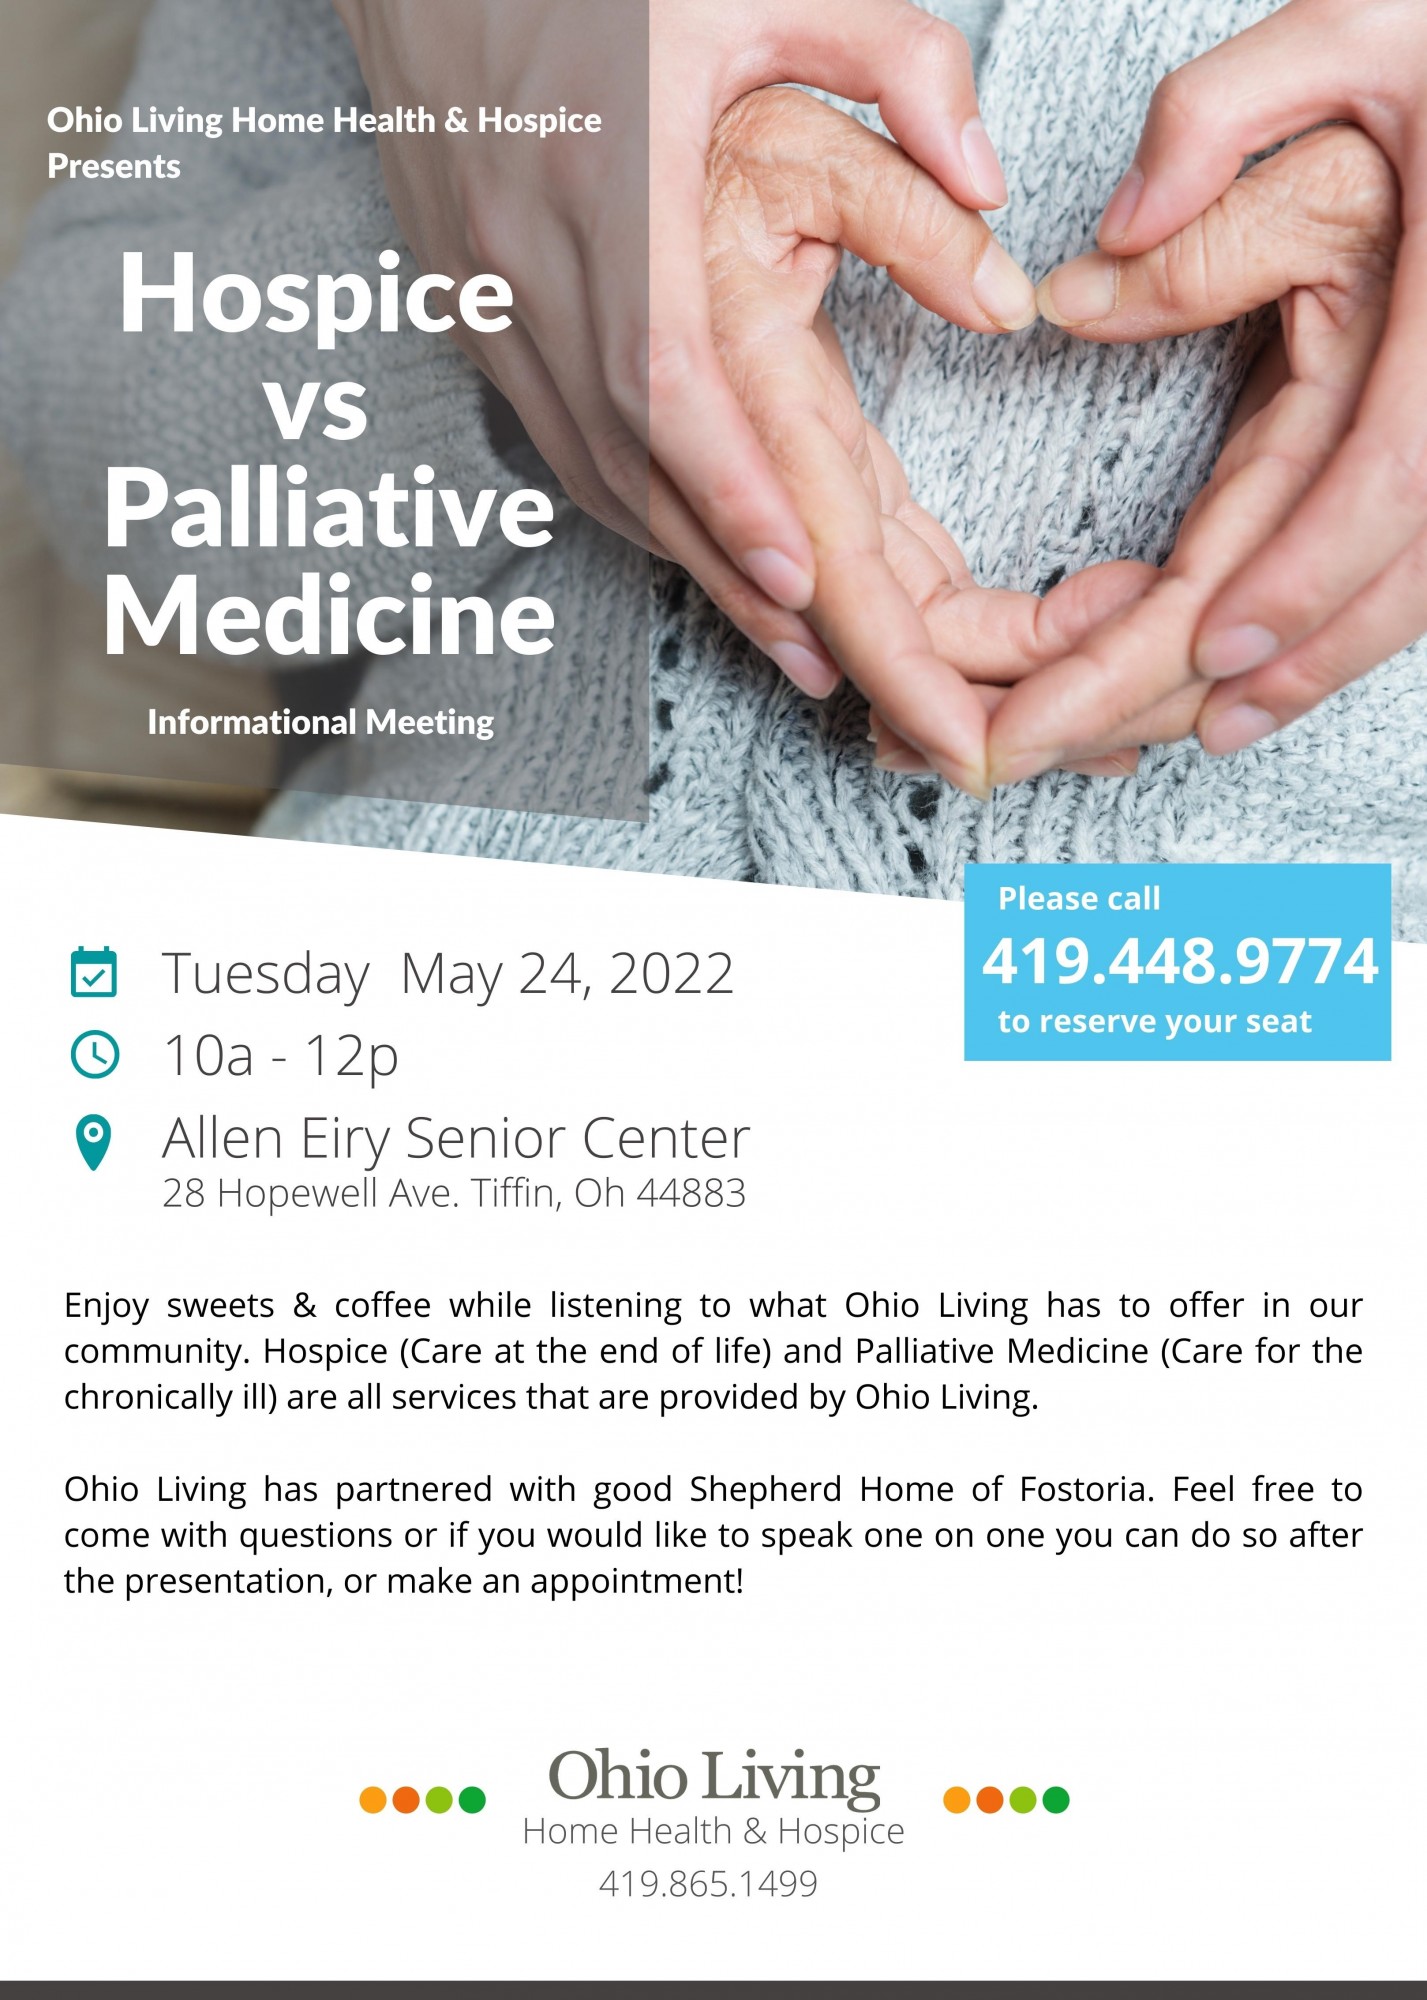 Ohio Living presents  a Hospice vs Palliative Medicine Informational Meeting